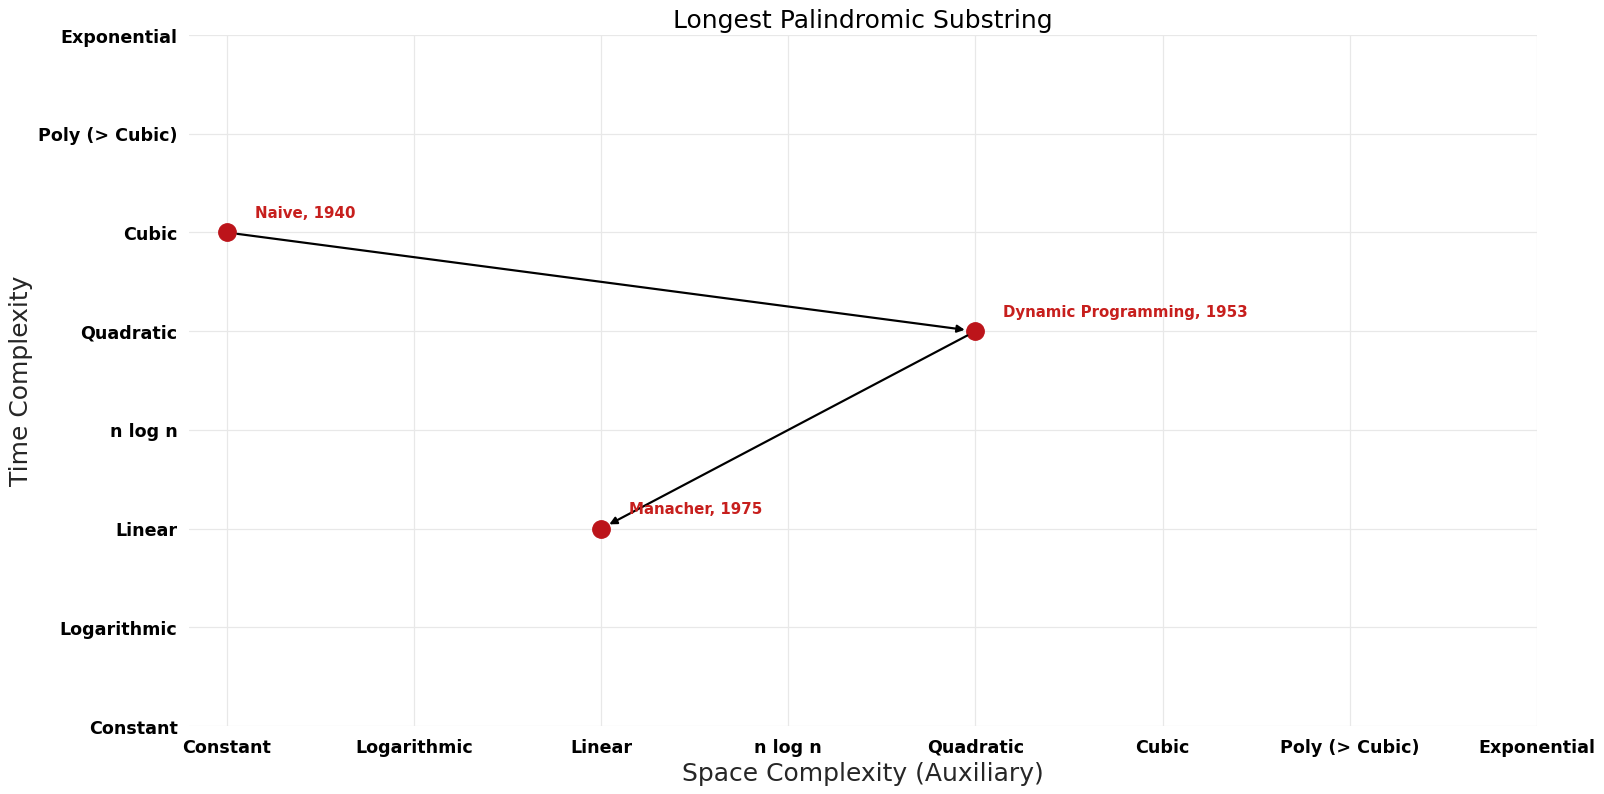 File:Longest Palindromic Substring - Pareto Frontier.png